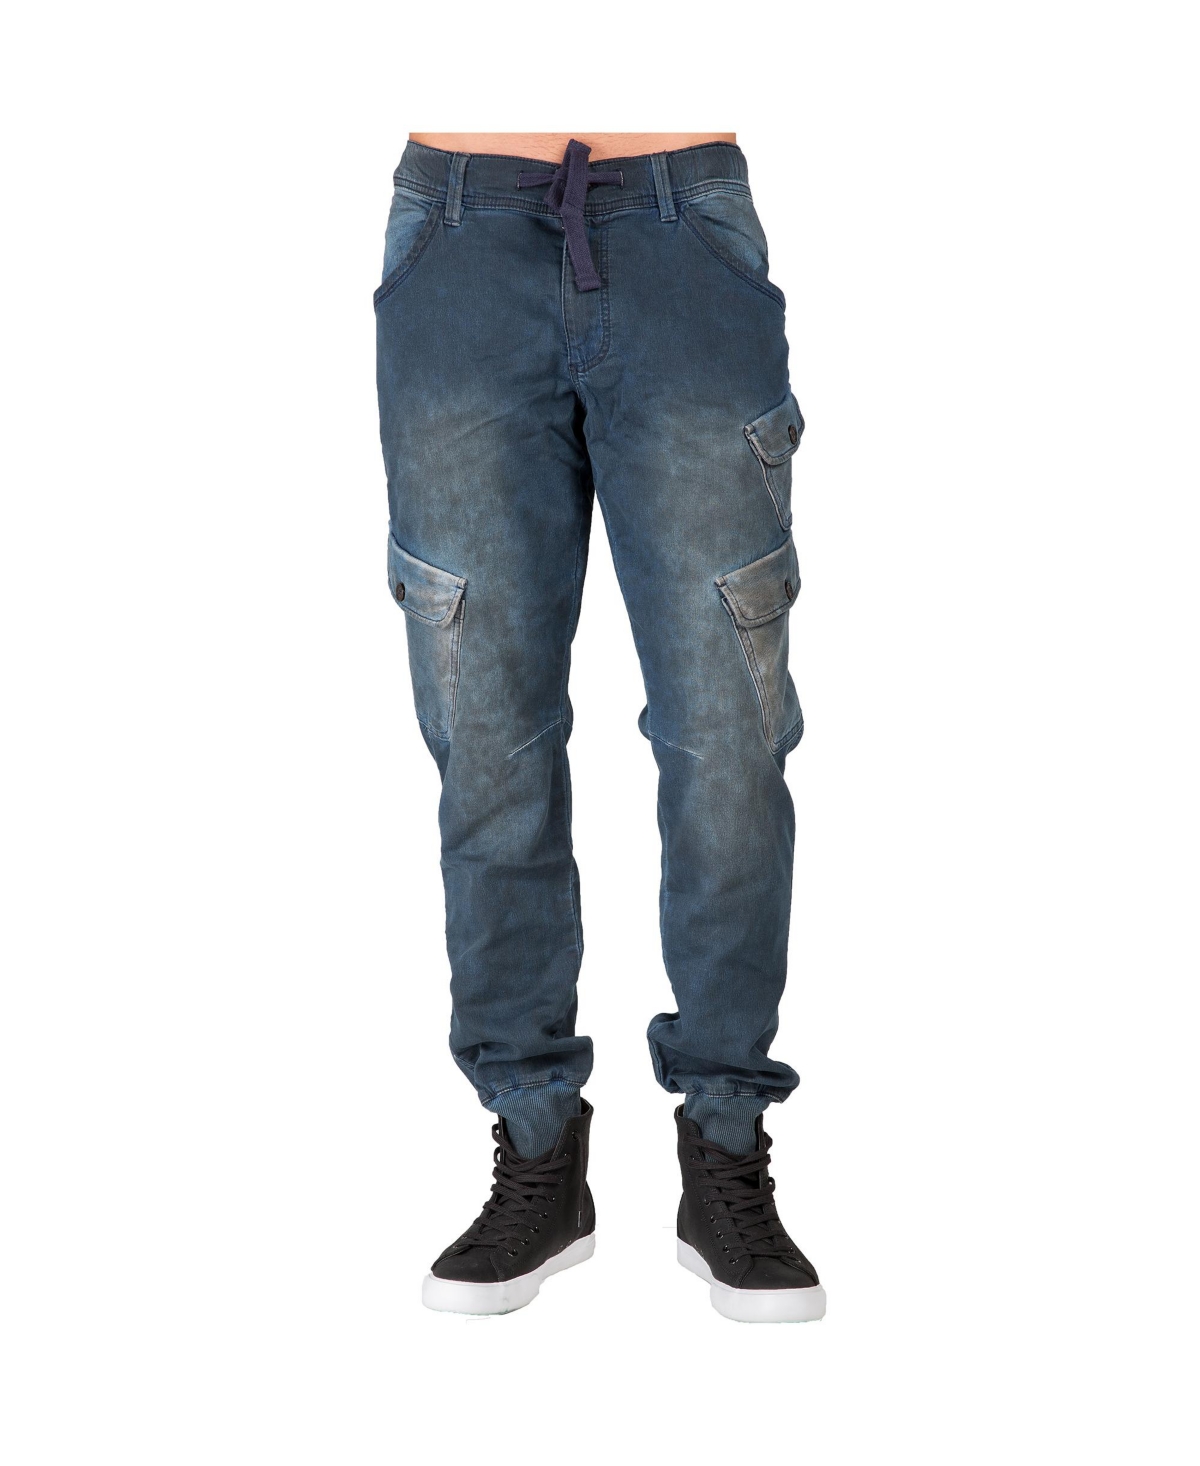 Men's Premium Knit Denim Jogger Jeans with Cargo Pockets - Ocean blue